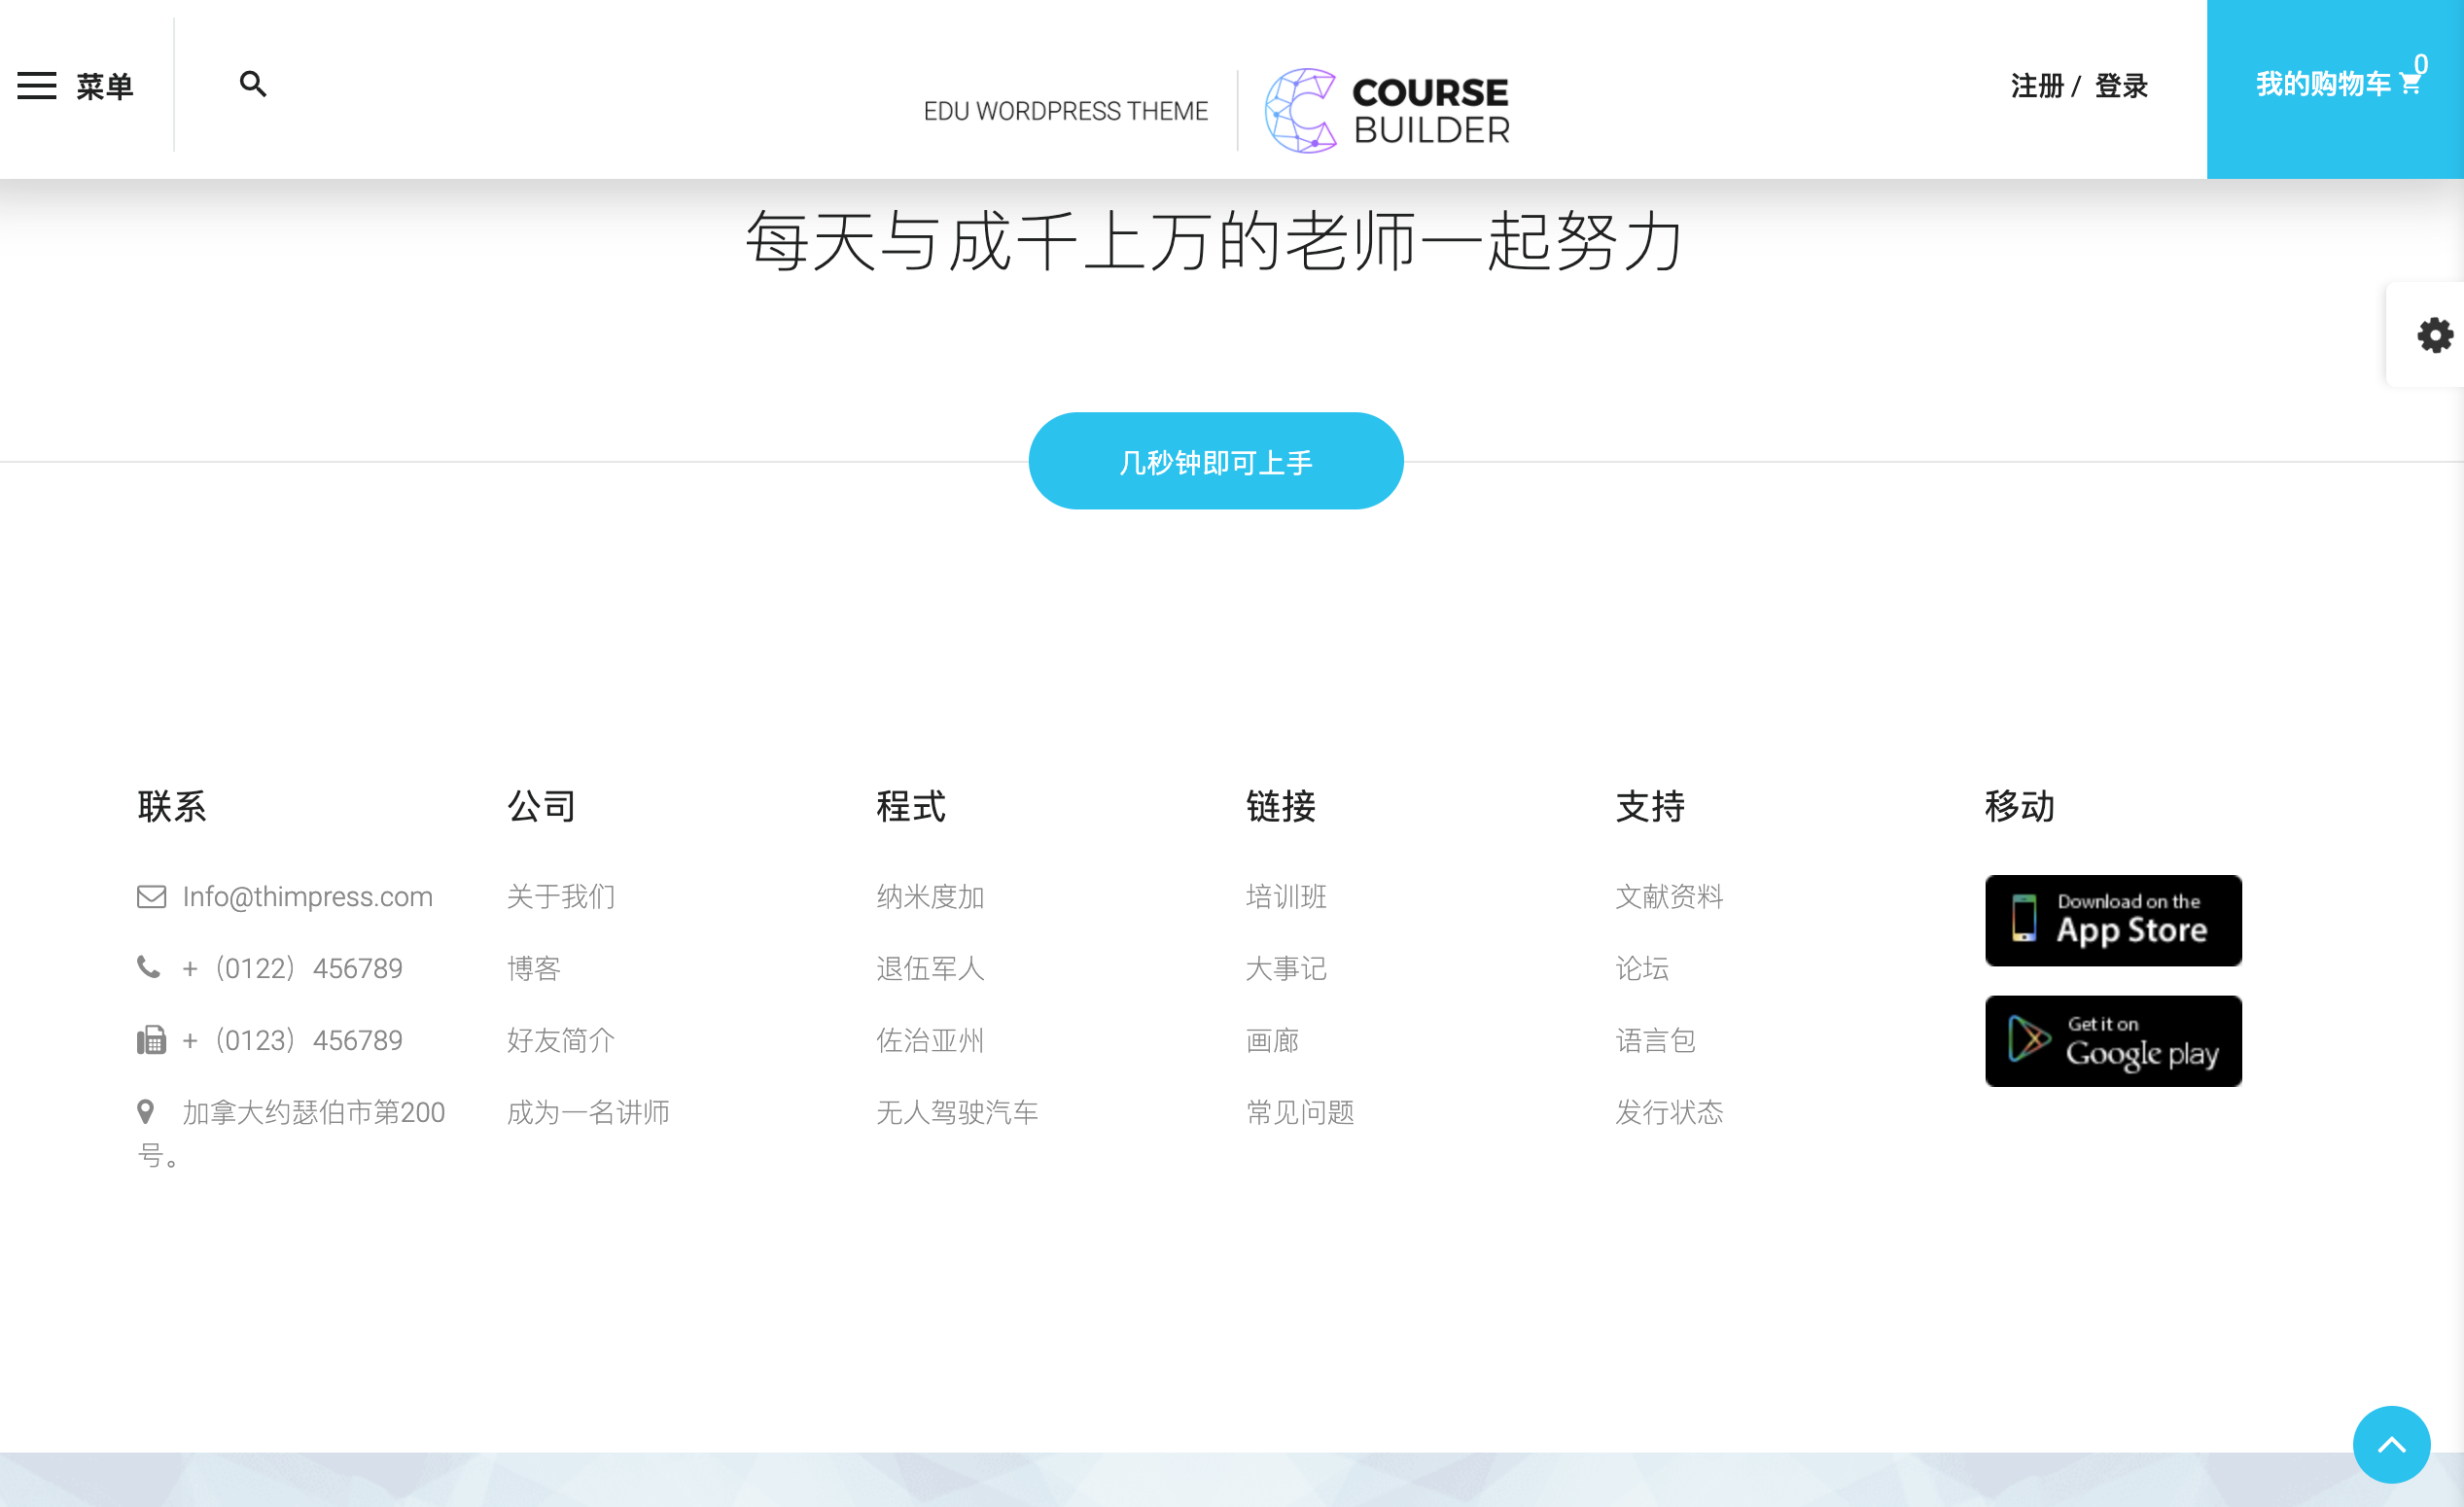 Course Builder | WordPress Lms Theme For Online Courses, Schools & Education 在线课程生成器